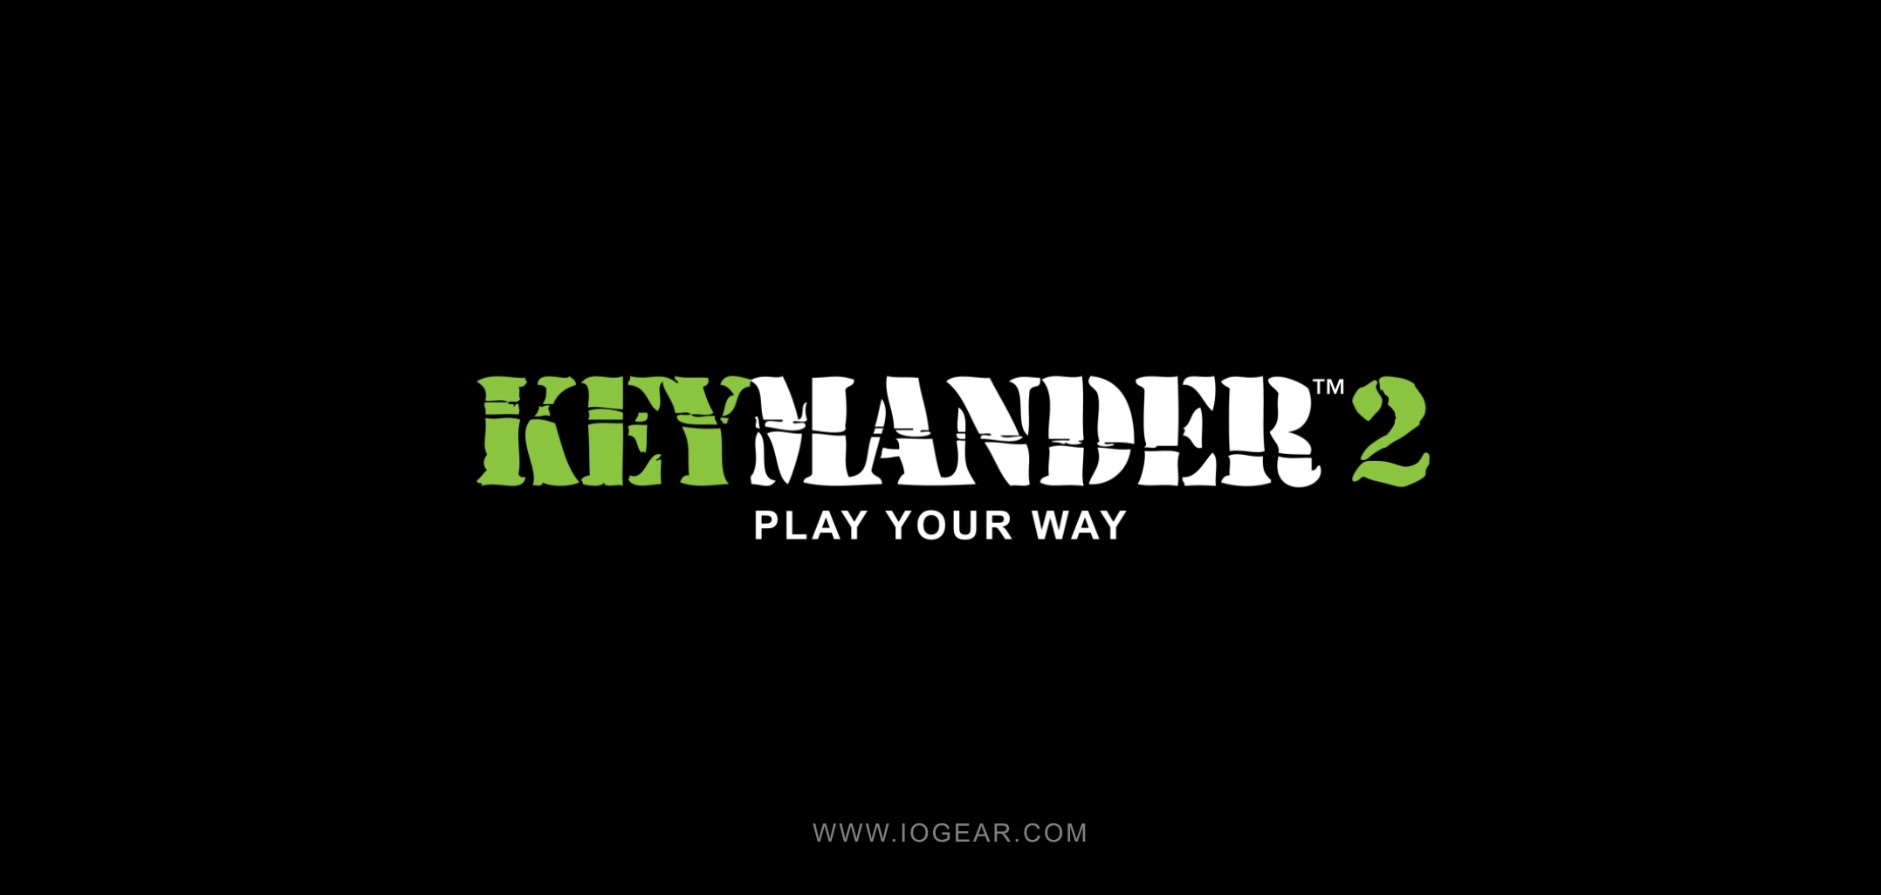 KeyMander 2